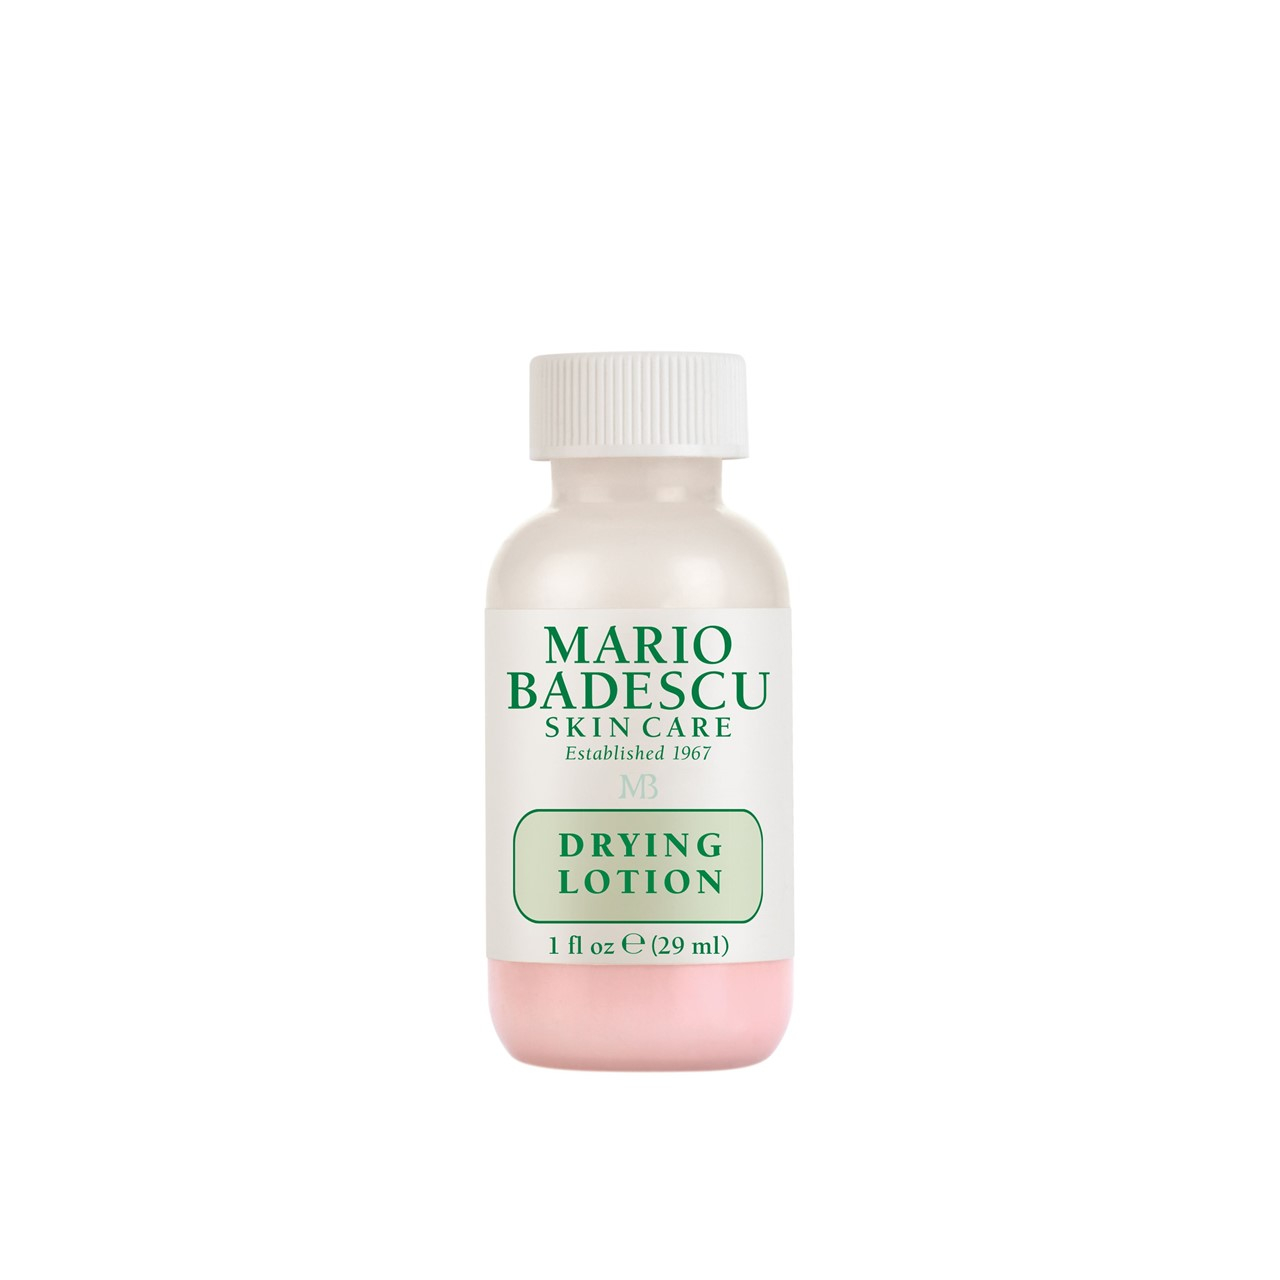 Mario Badescu Drying Lotion (Plastic Bottle) 29ml (0.98fl oz)